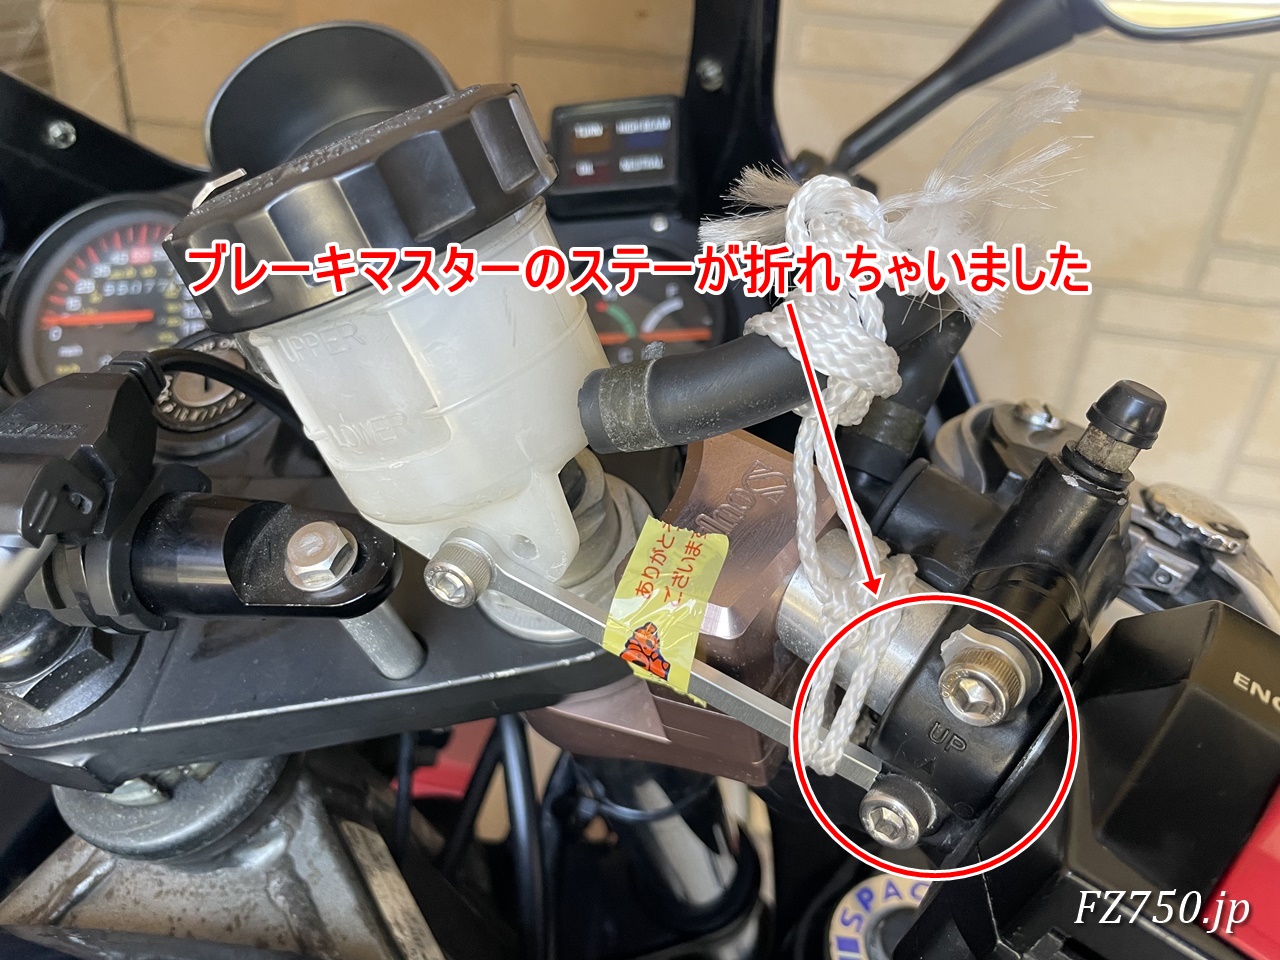 FZ750 フロントブレーキマスターのタンクステー交換ほか - FZ750.jp